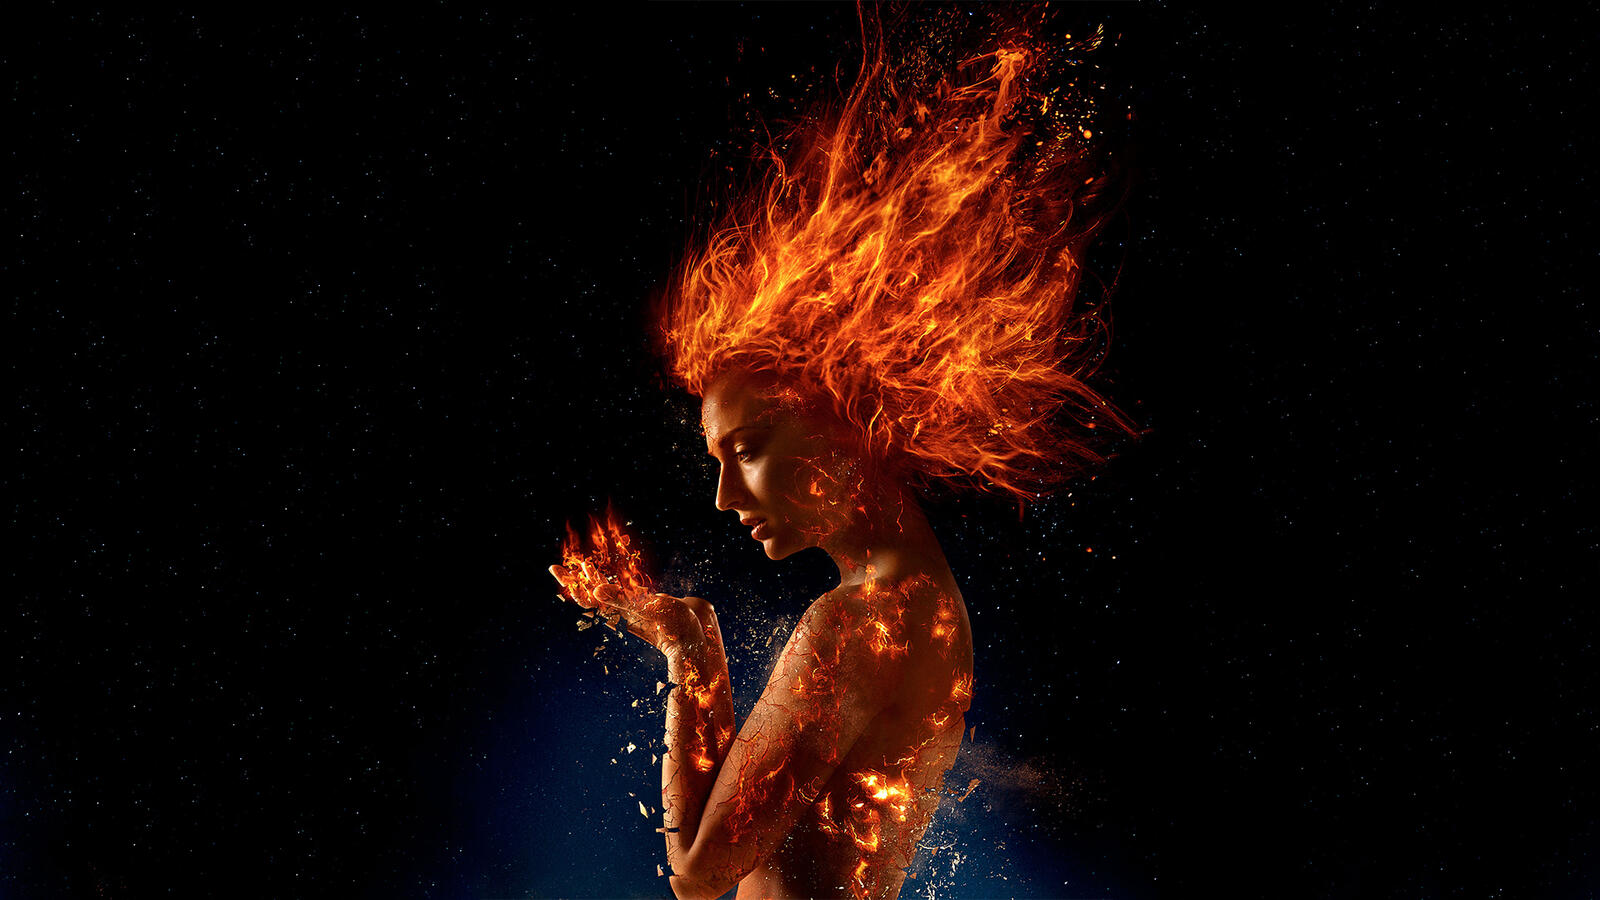 Wallpapers Sophie Turner x men dark phoenix 2019 Movies on the desktop